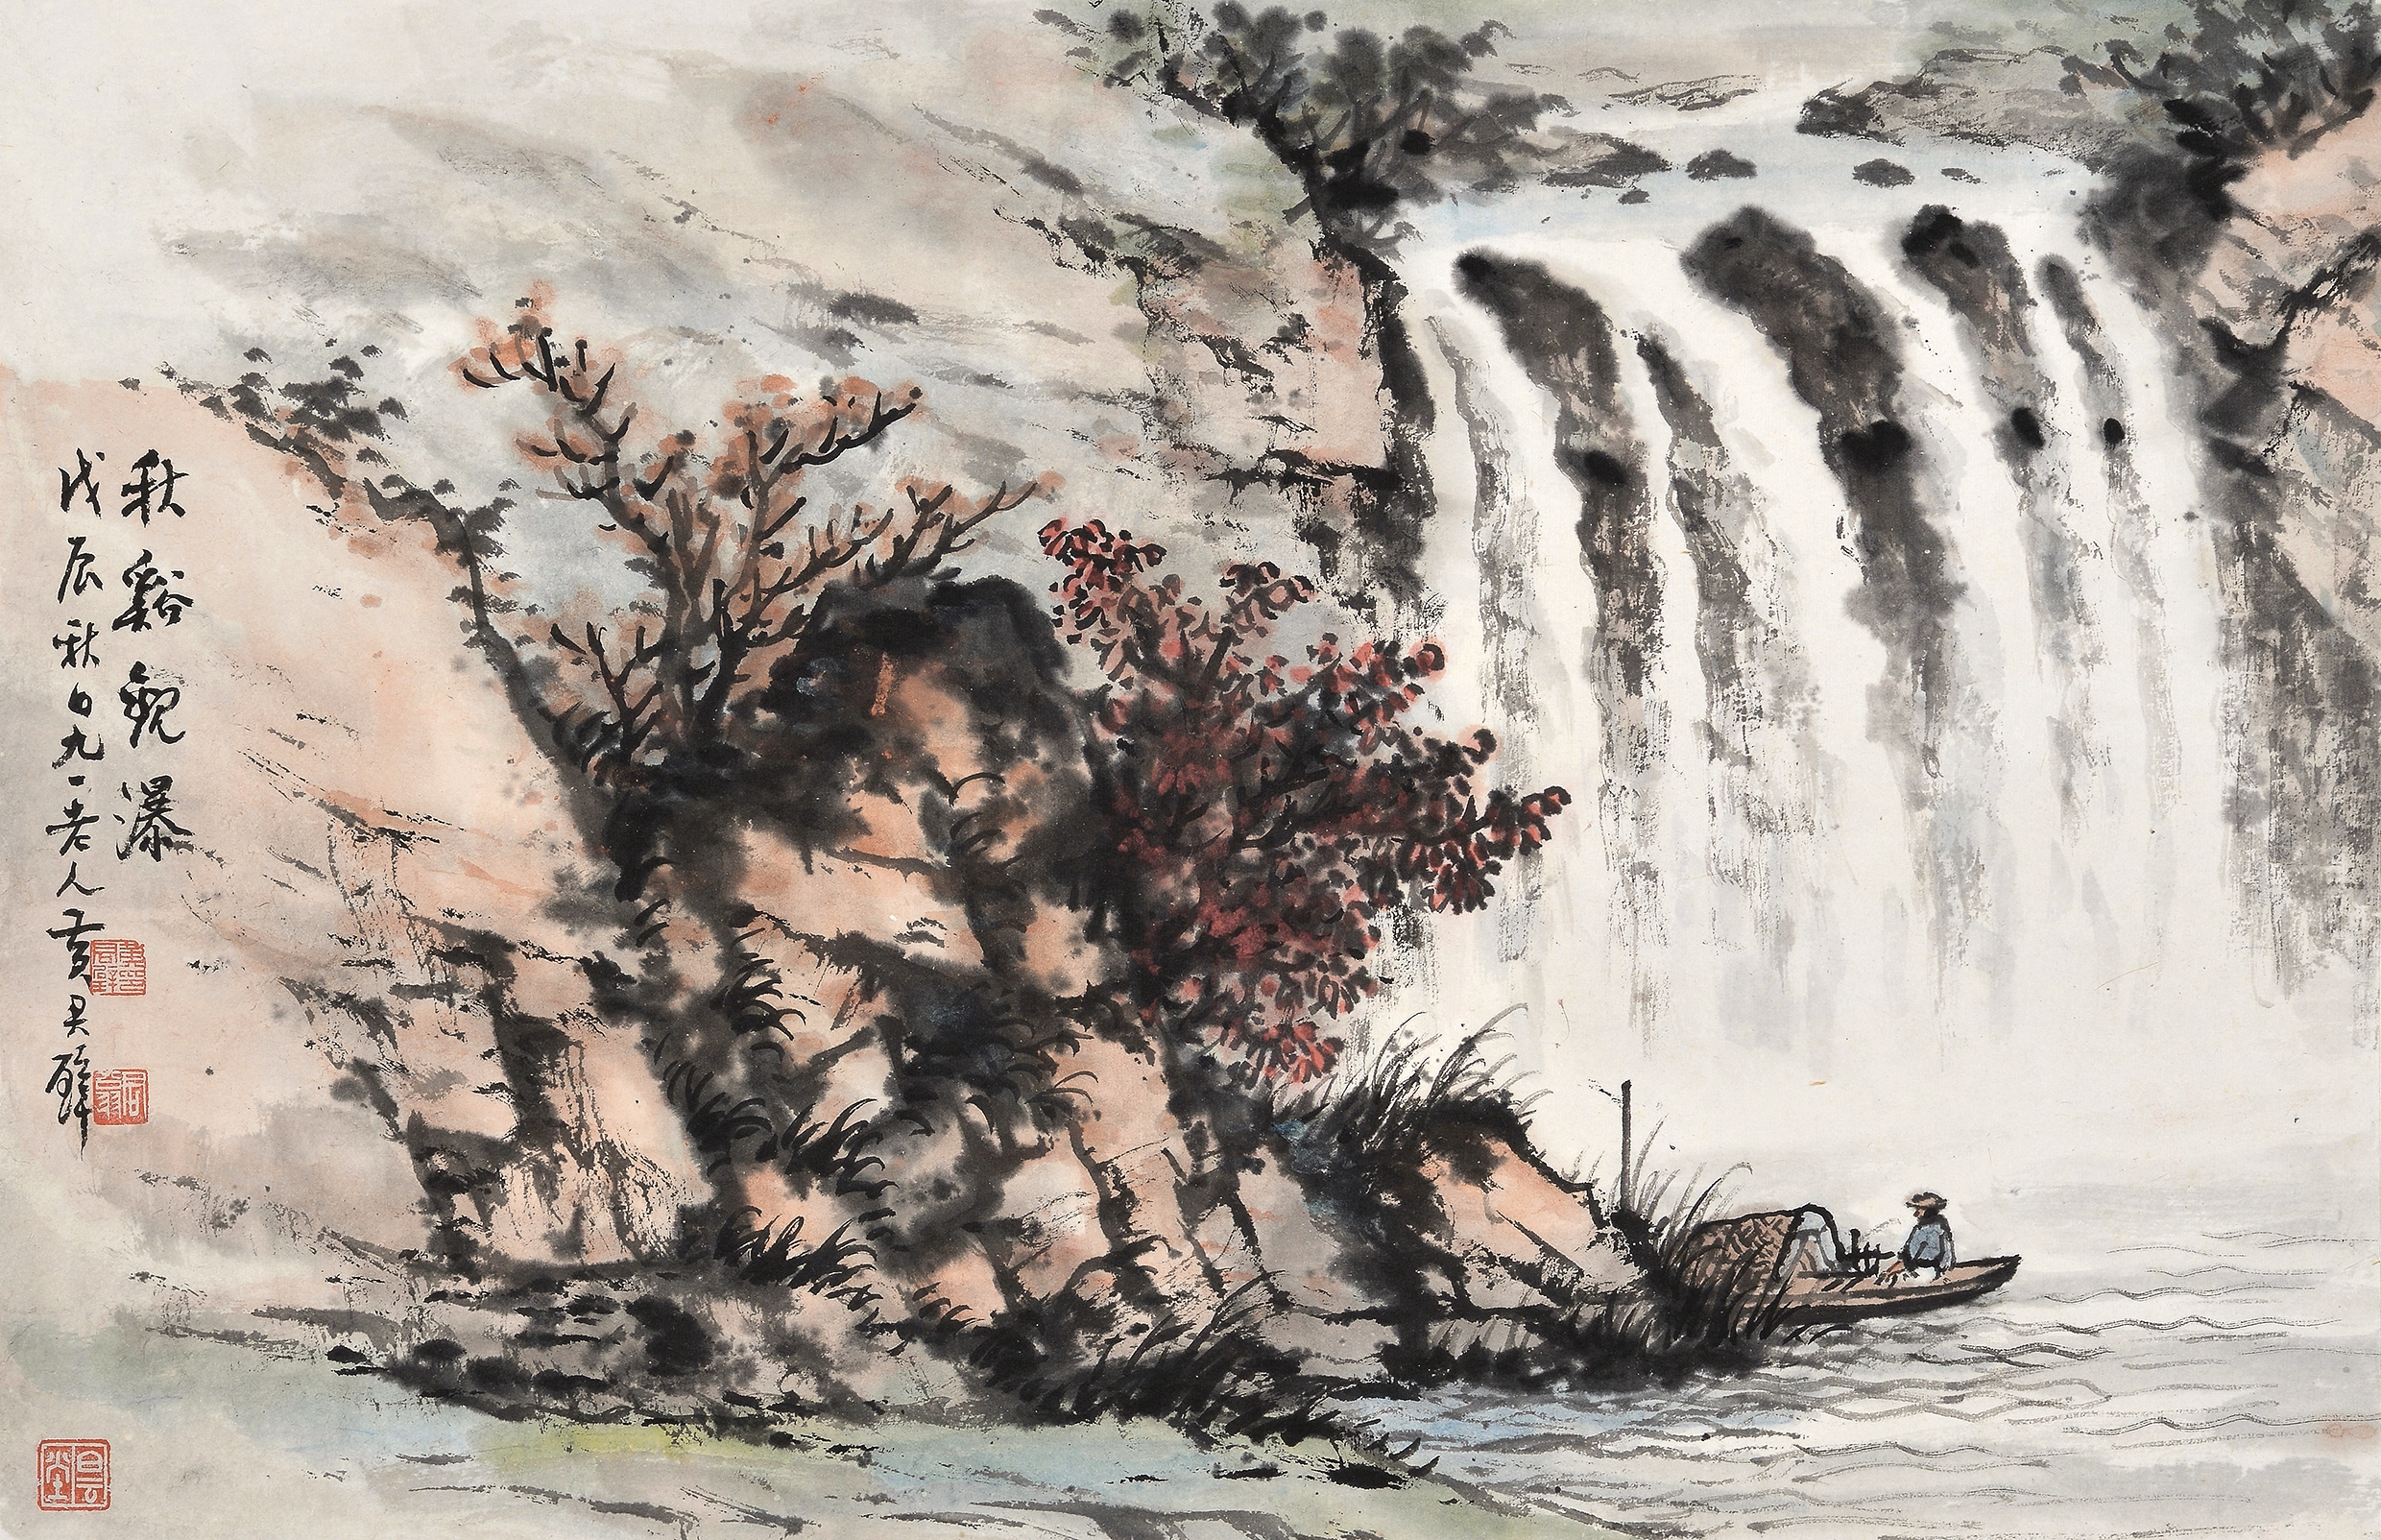 WATERFALL IN AUTUMN by Huang Junbi, 1988